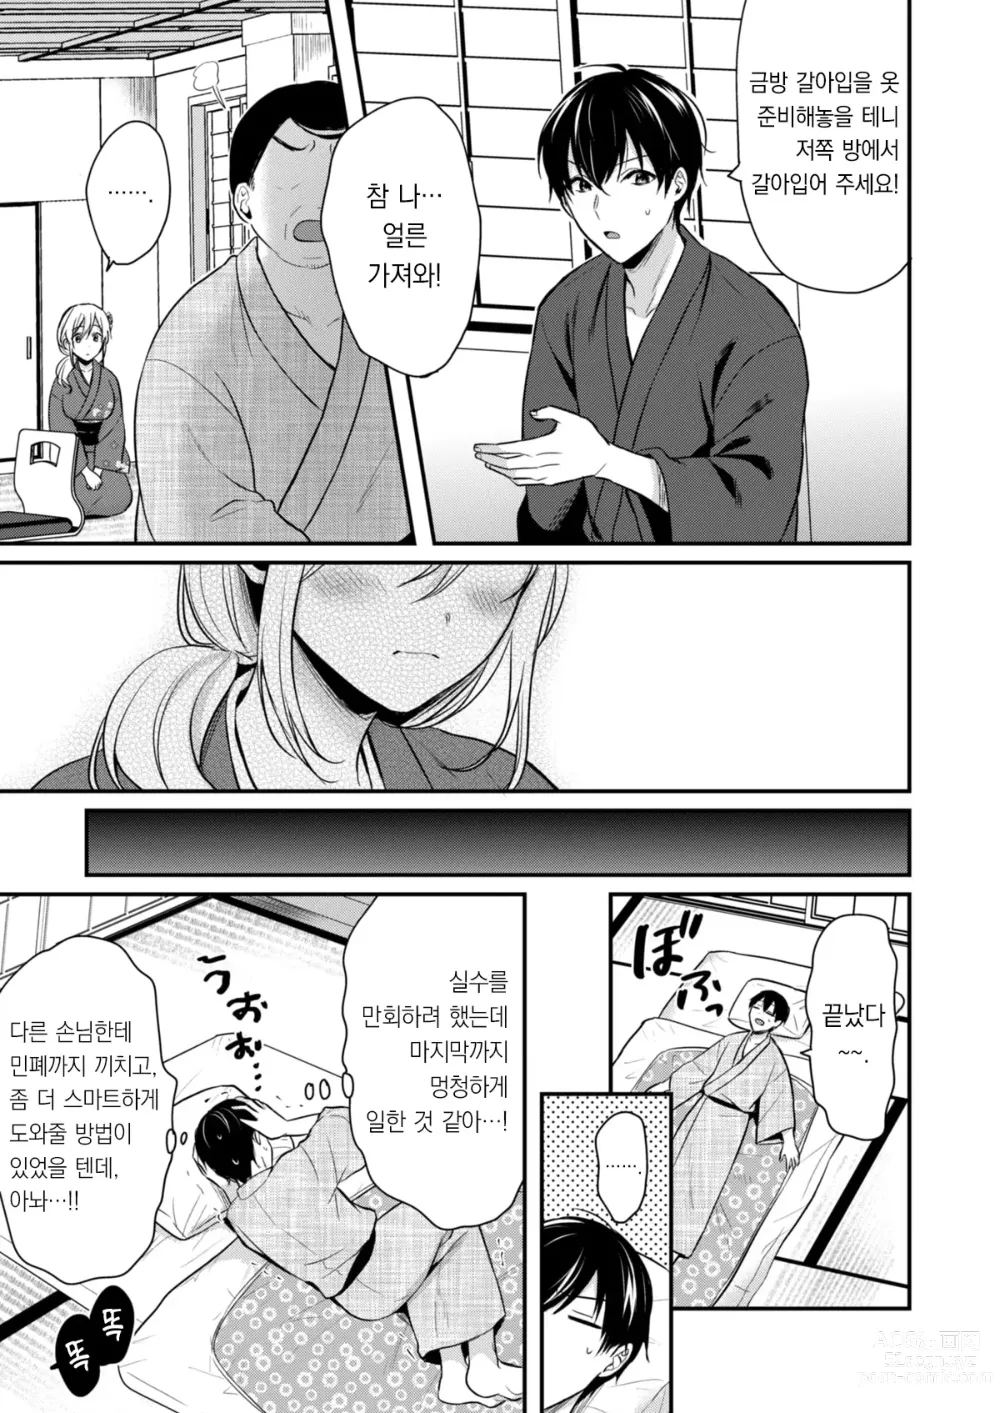 Page 9 of manga 내 여름방학은 젊은 갸루 안주인과 알바 생활?! 4